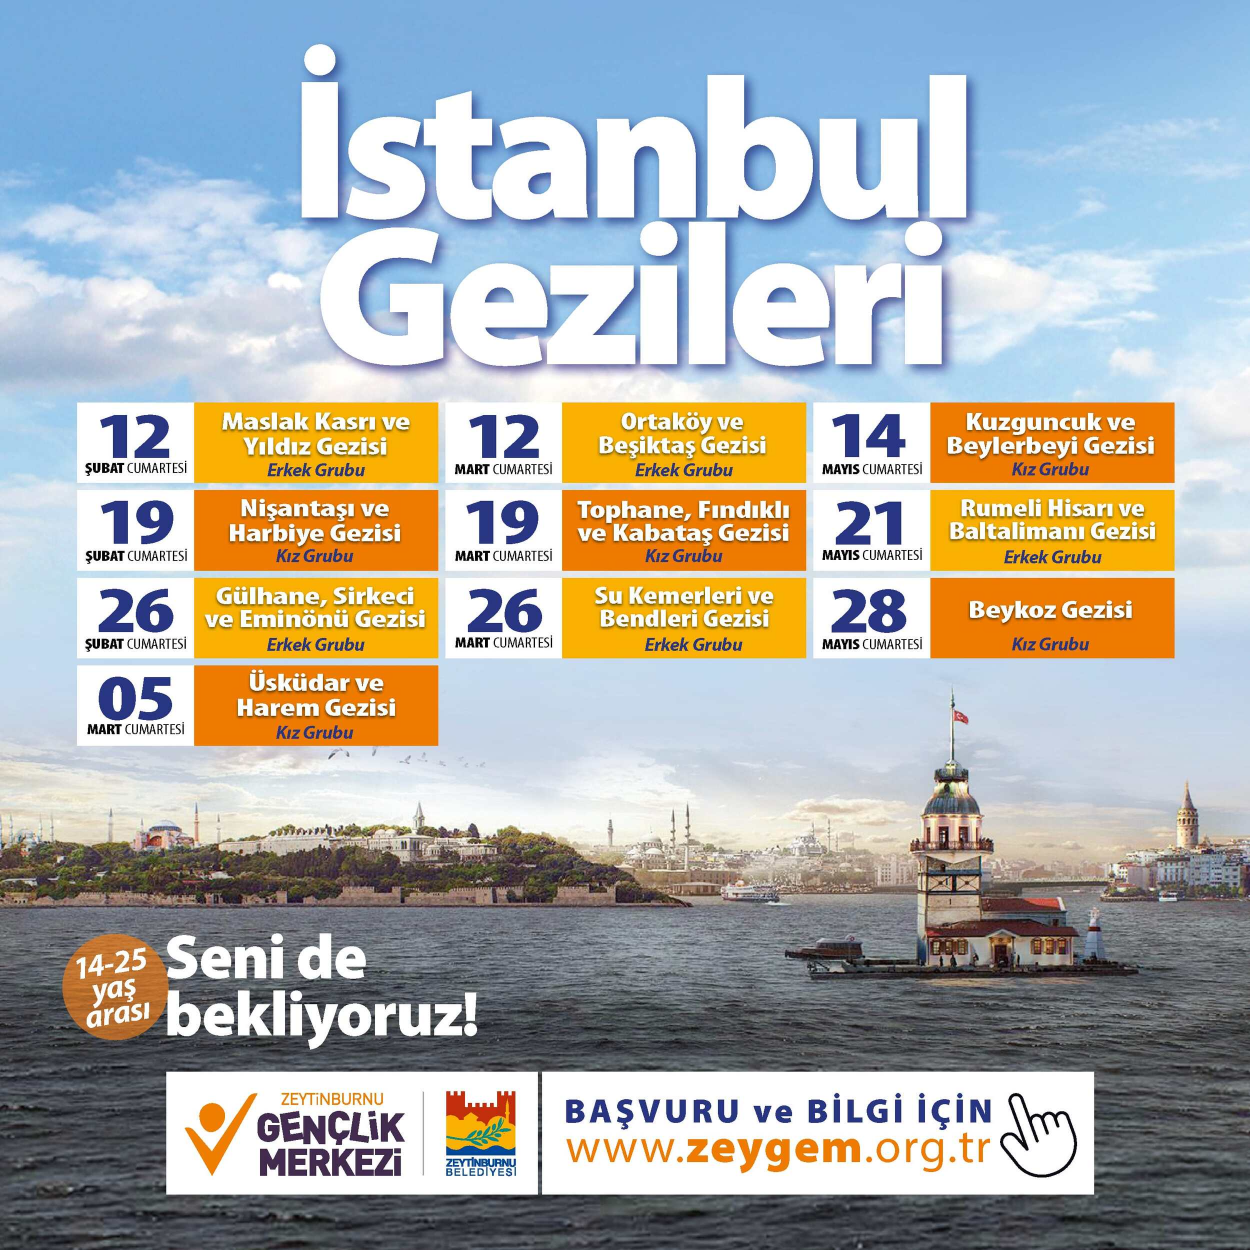 fest travel istanbul gezileri